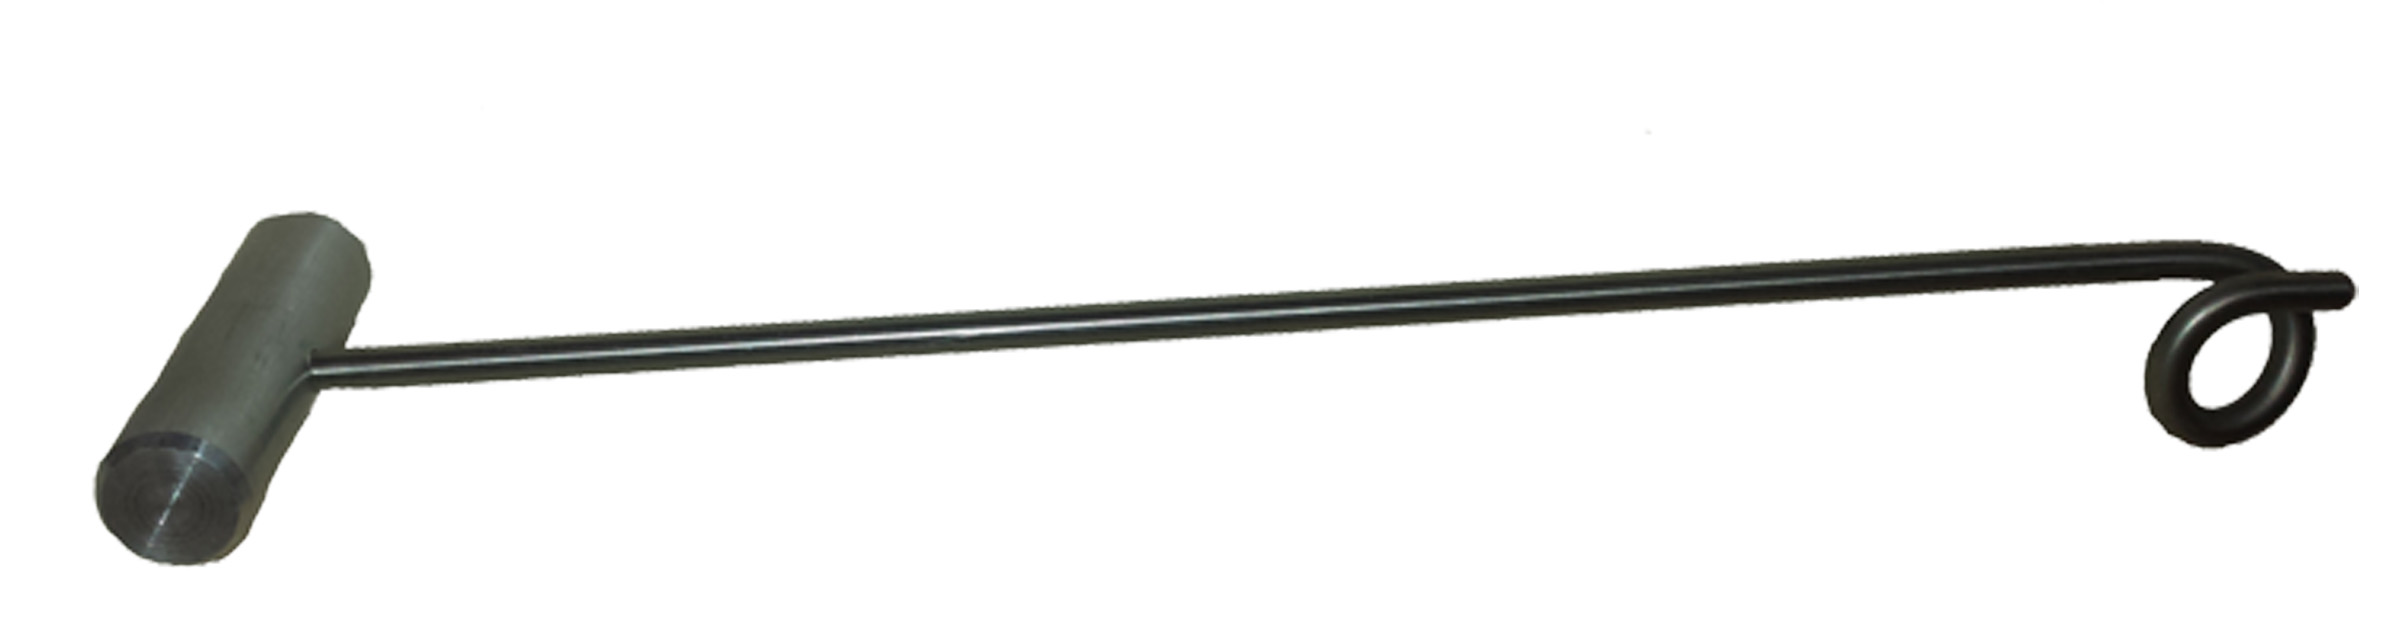 Hi-Liner 36″ Extra Long Pigtail Dehooker